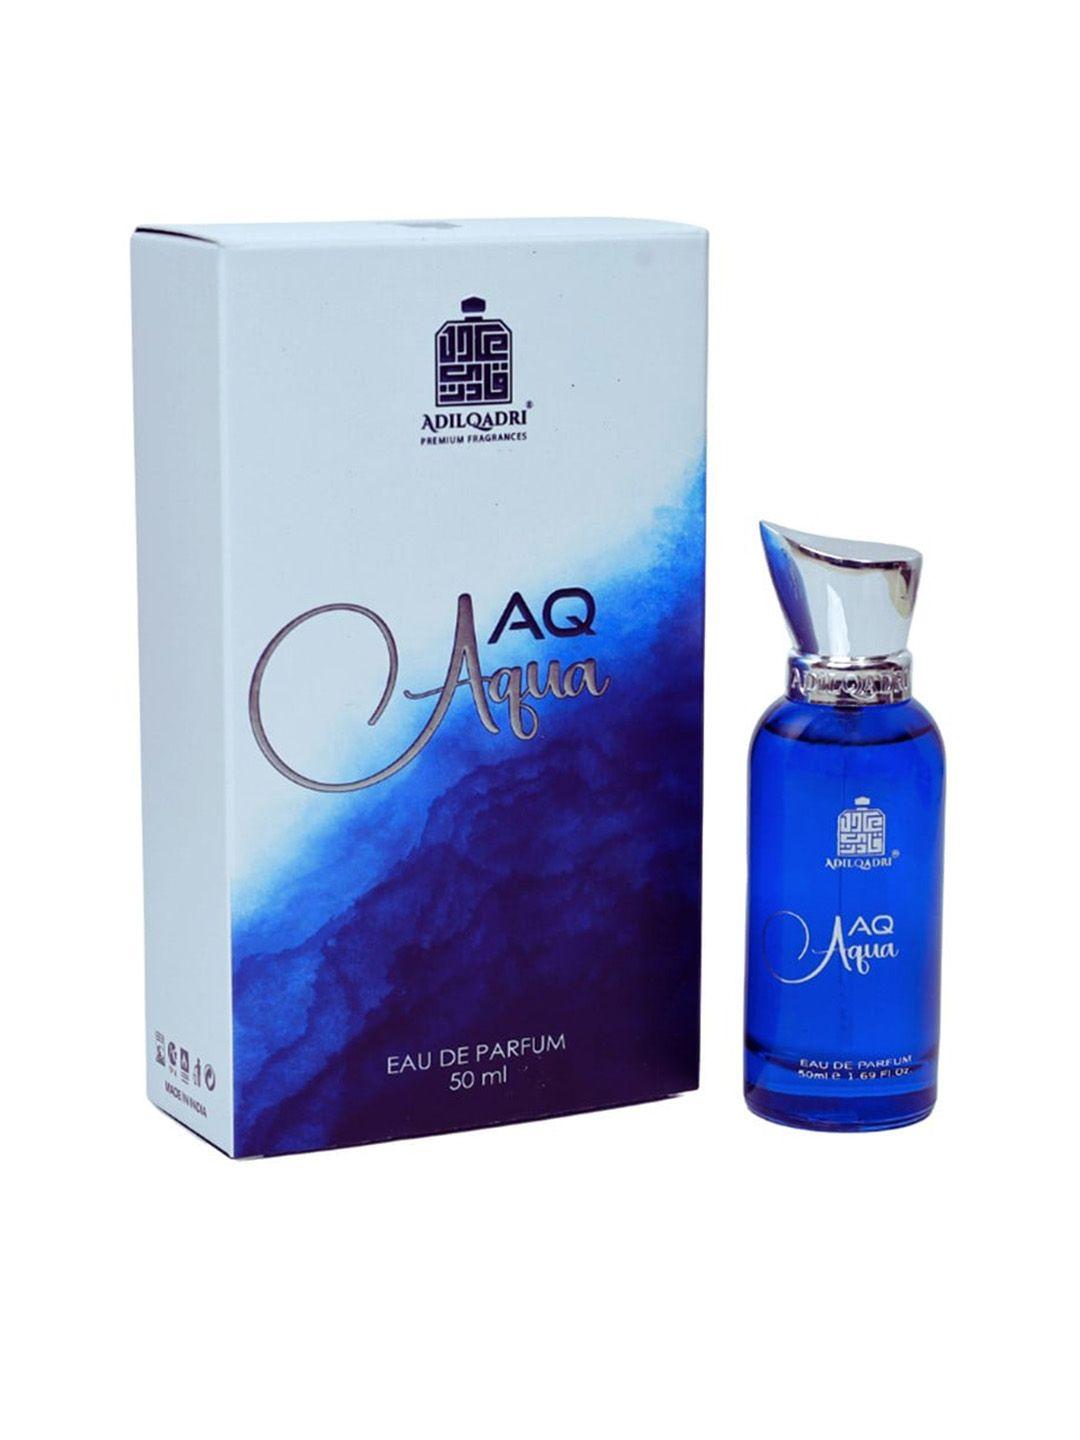 adilqadri aq aqua long lasting eau de parfum - 50ml